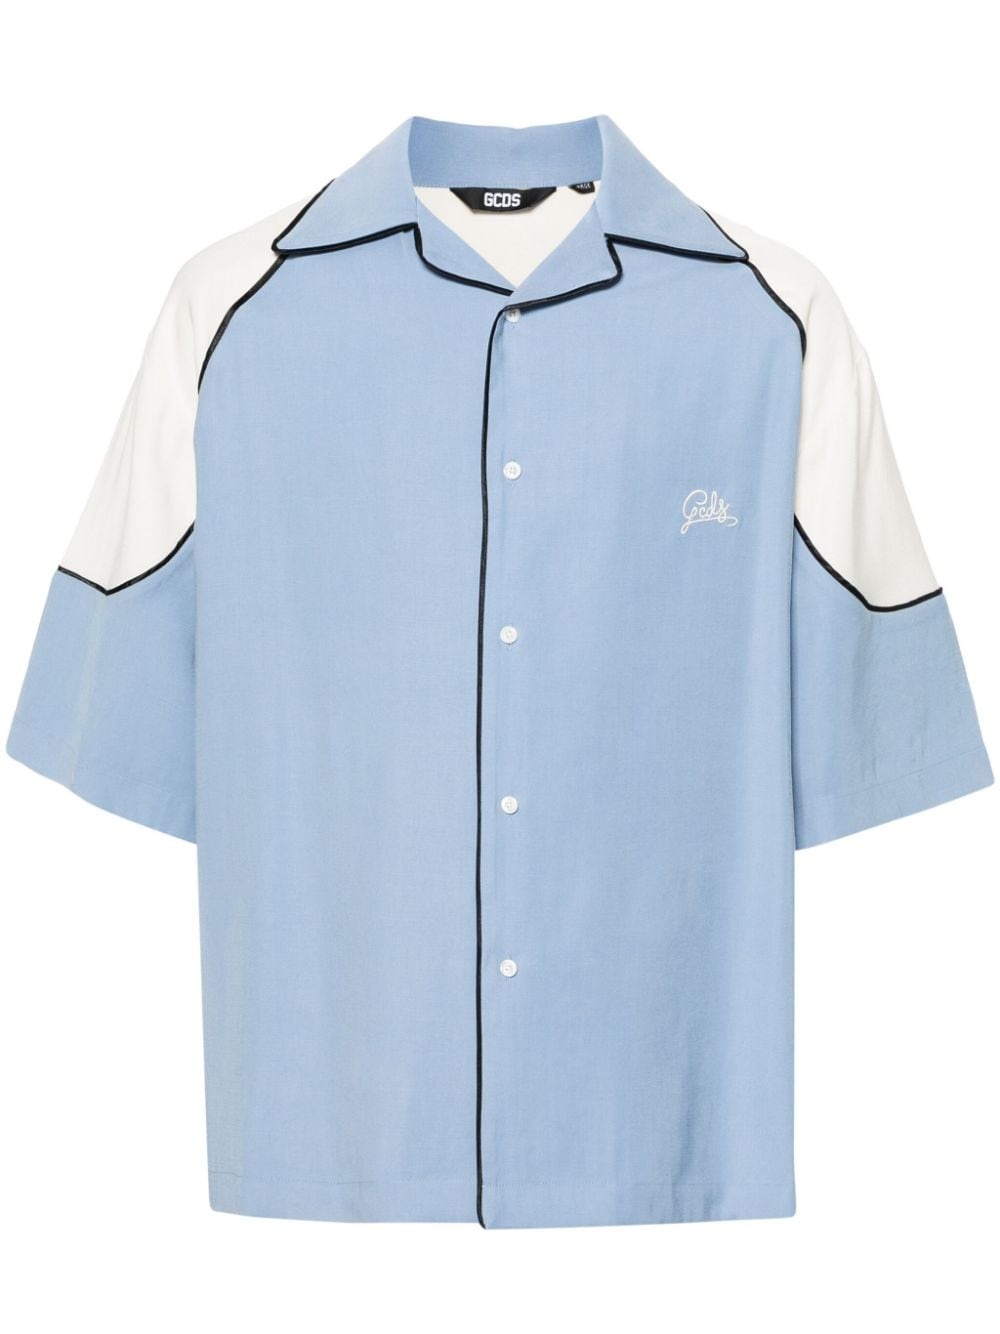 Comma cotton bowling shirt - 1